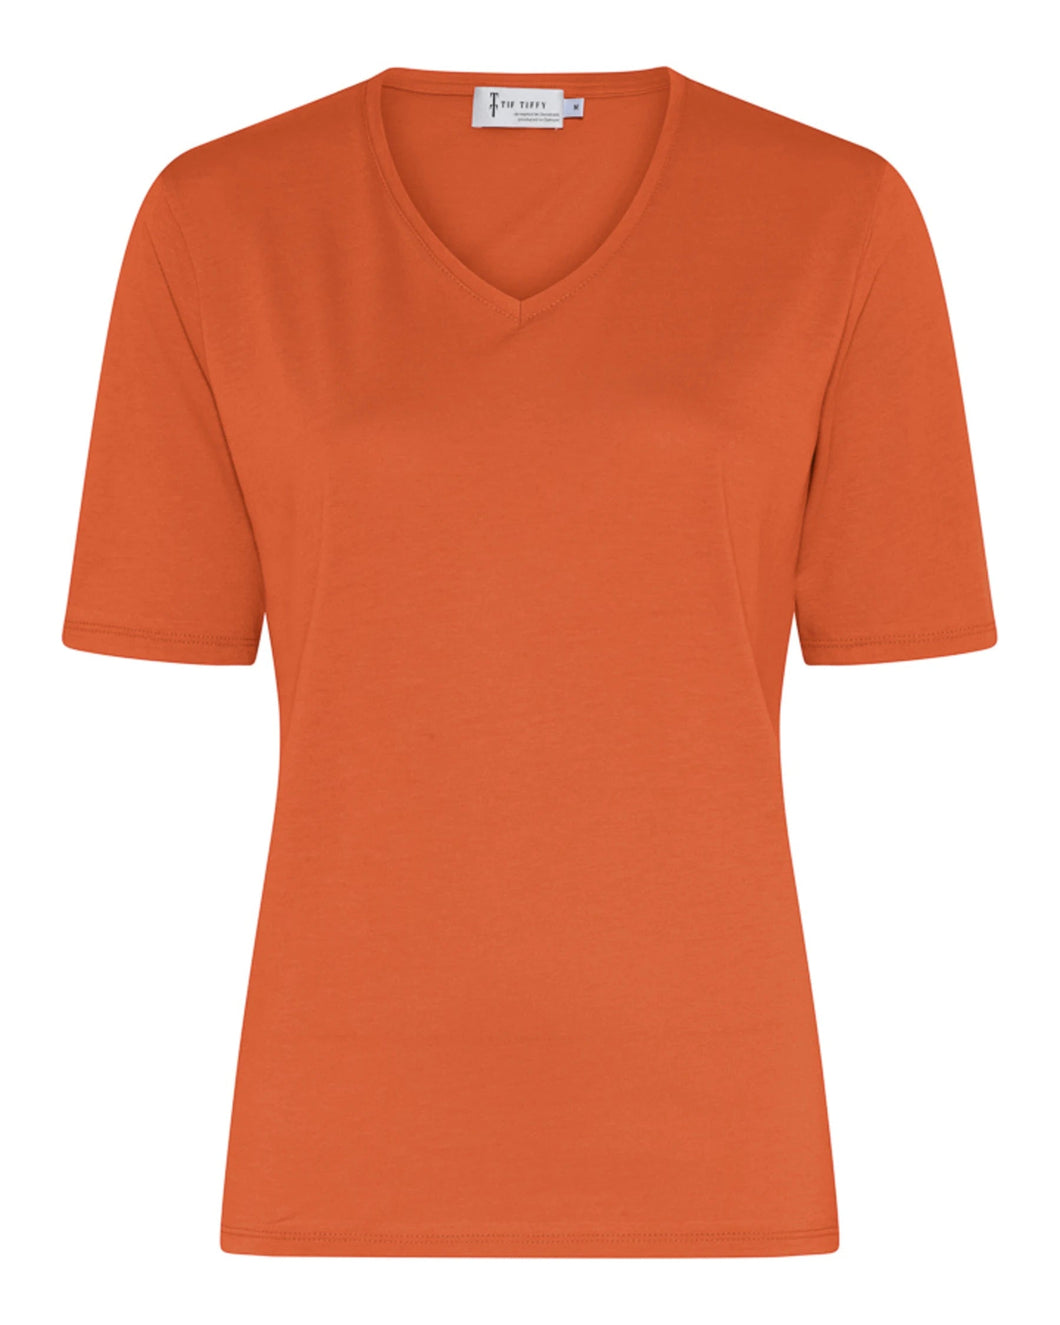 T-Shirt Gina Warm Orange V-Ausschnitt Gr. L